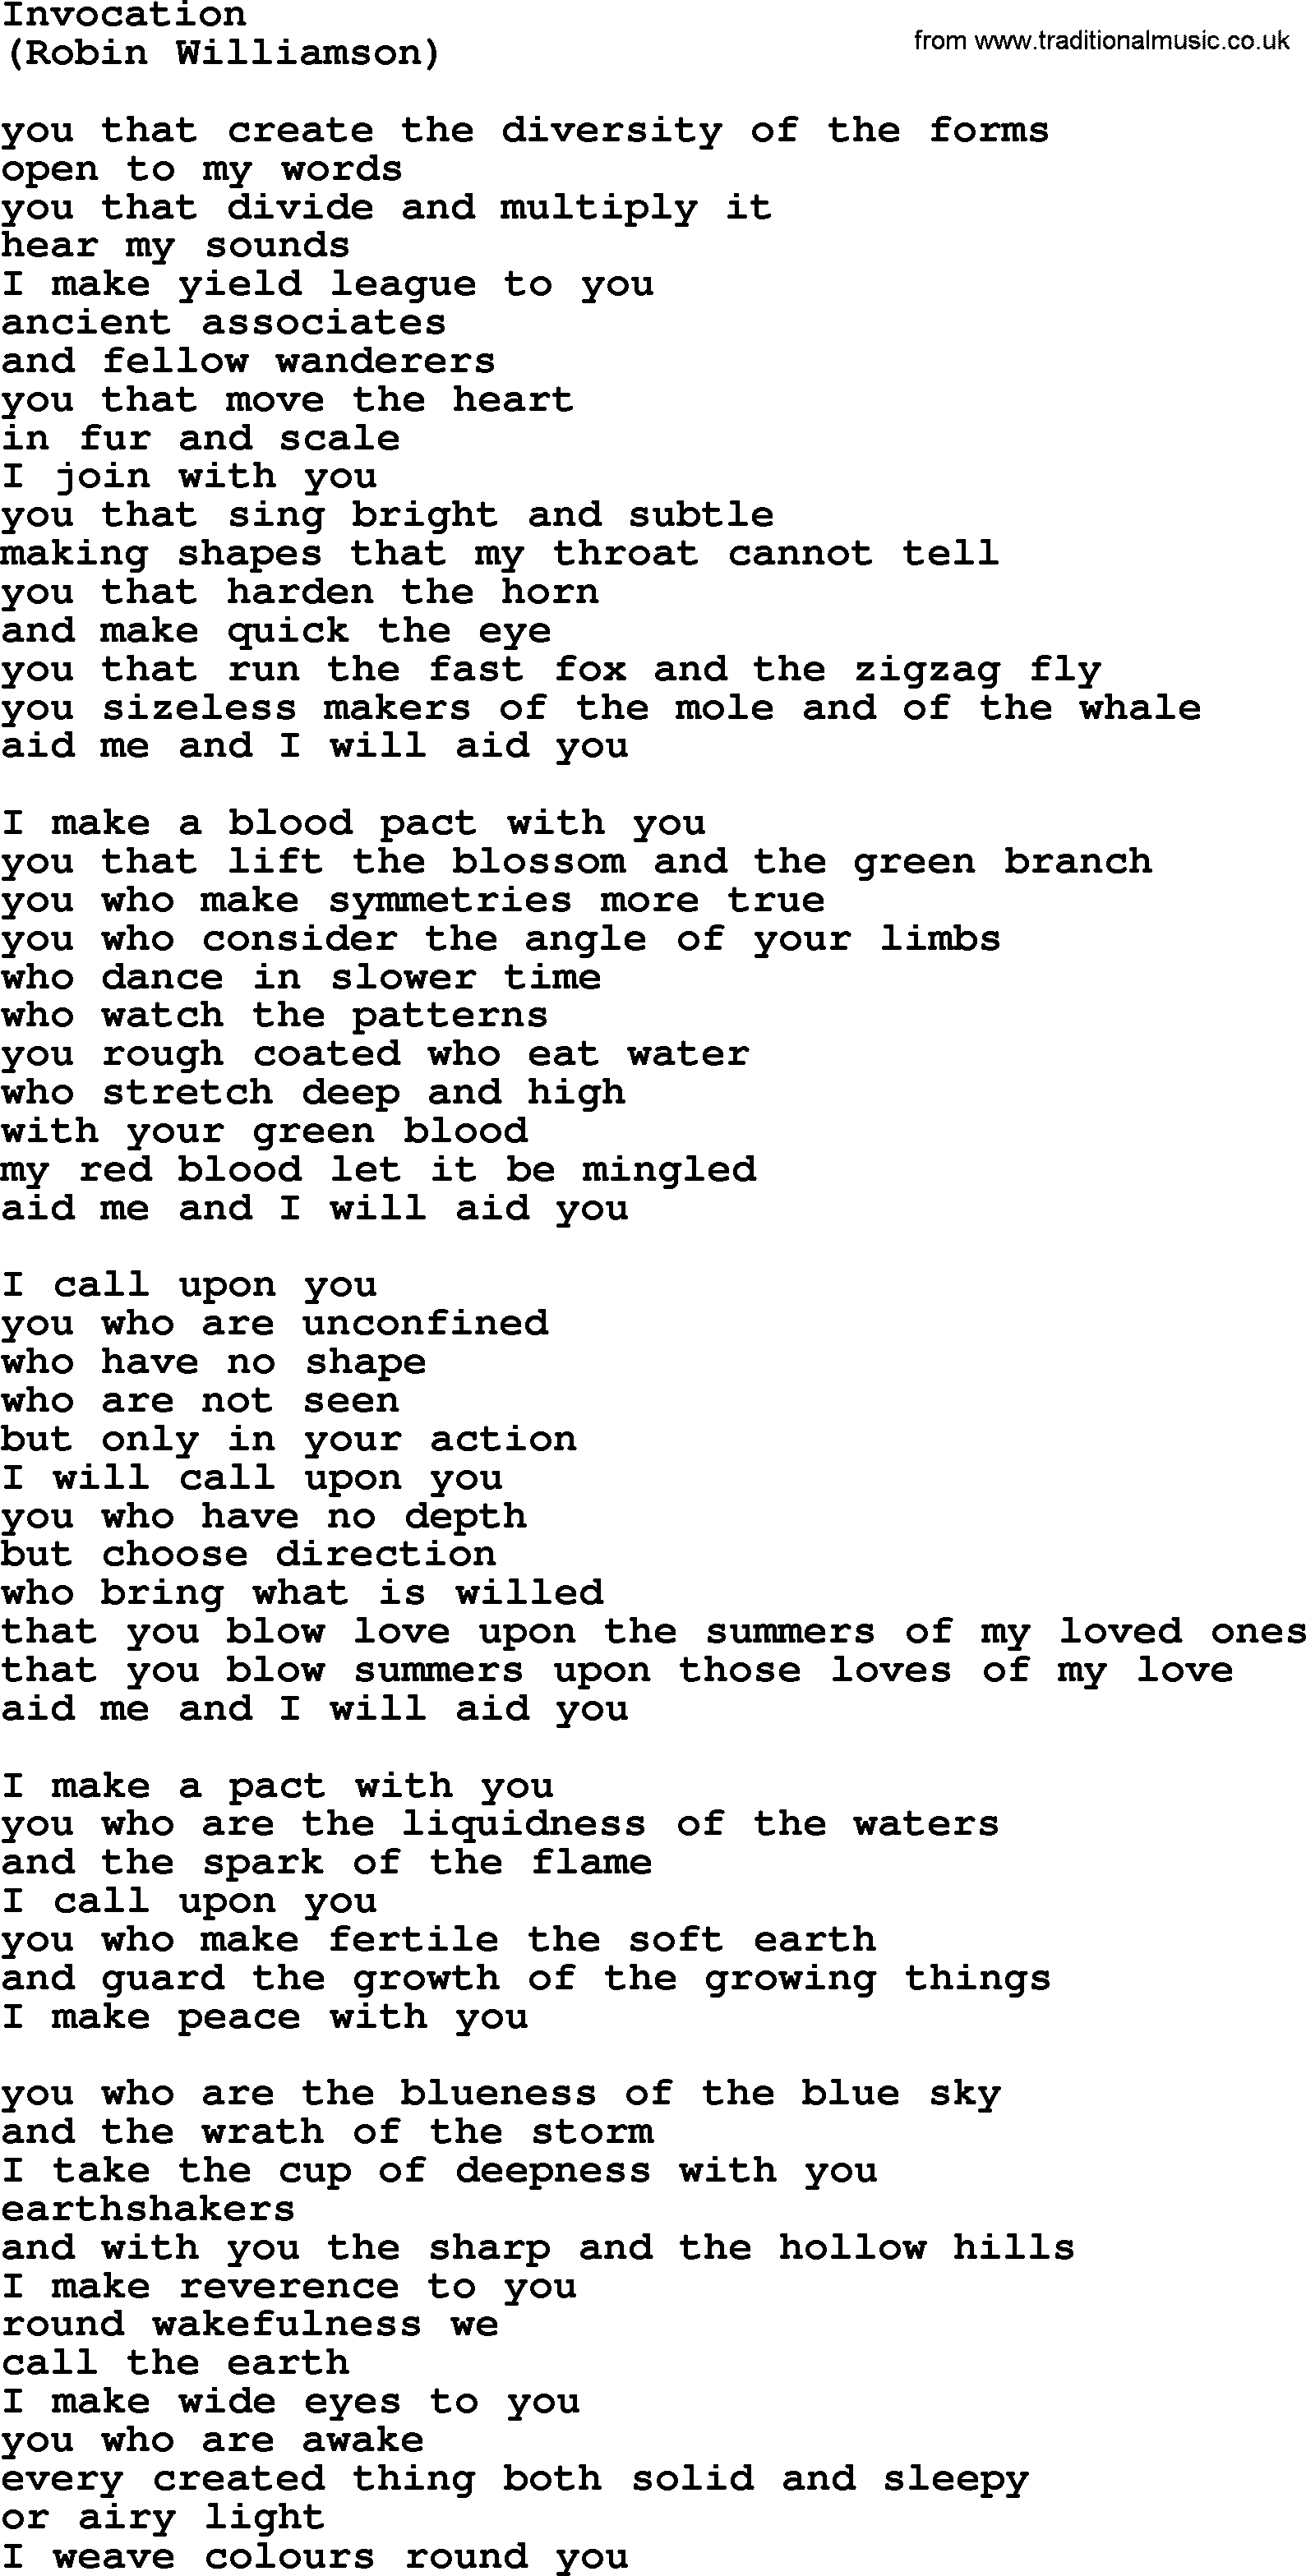 The Byrds song Invocation, lyrics